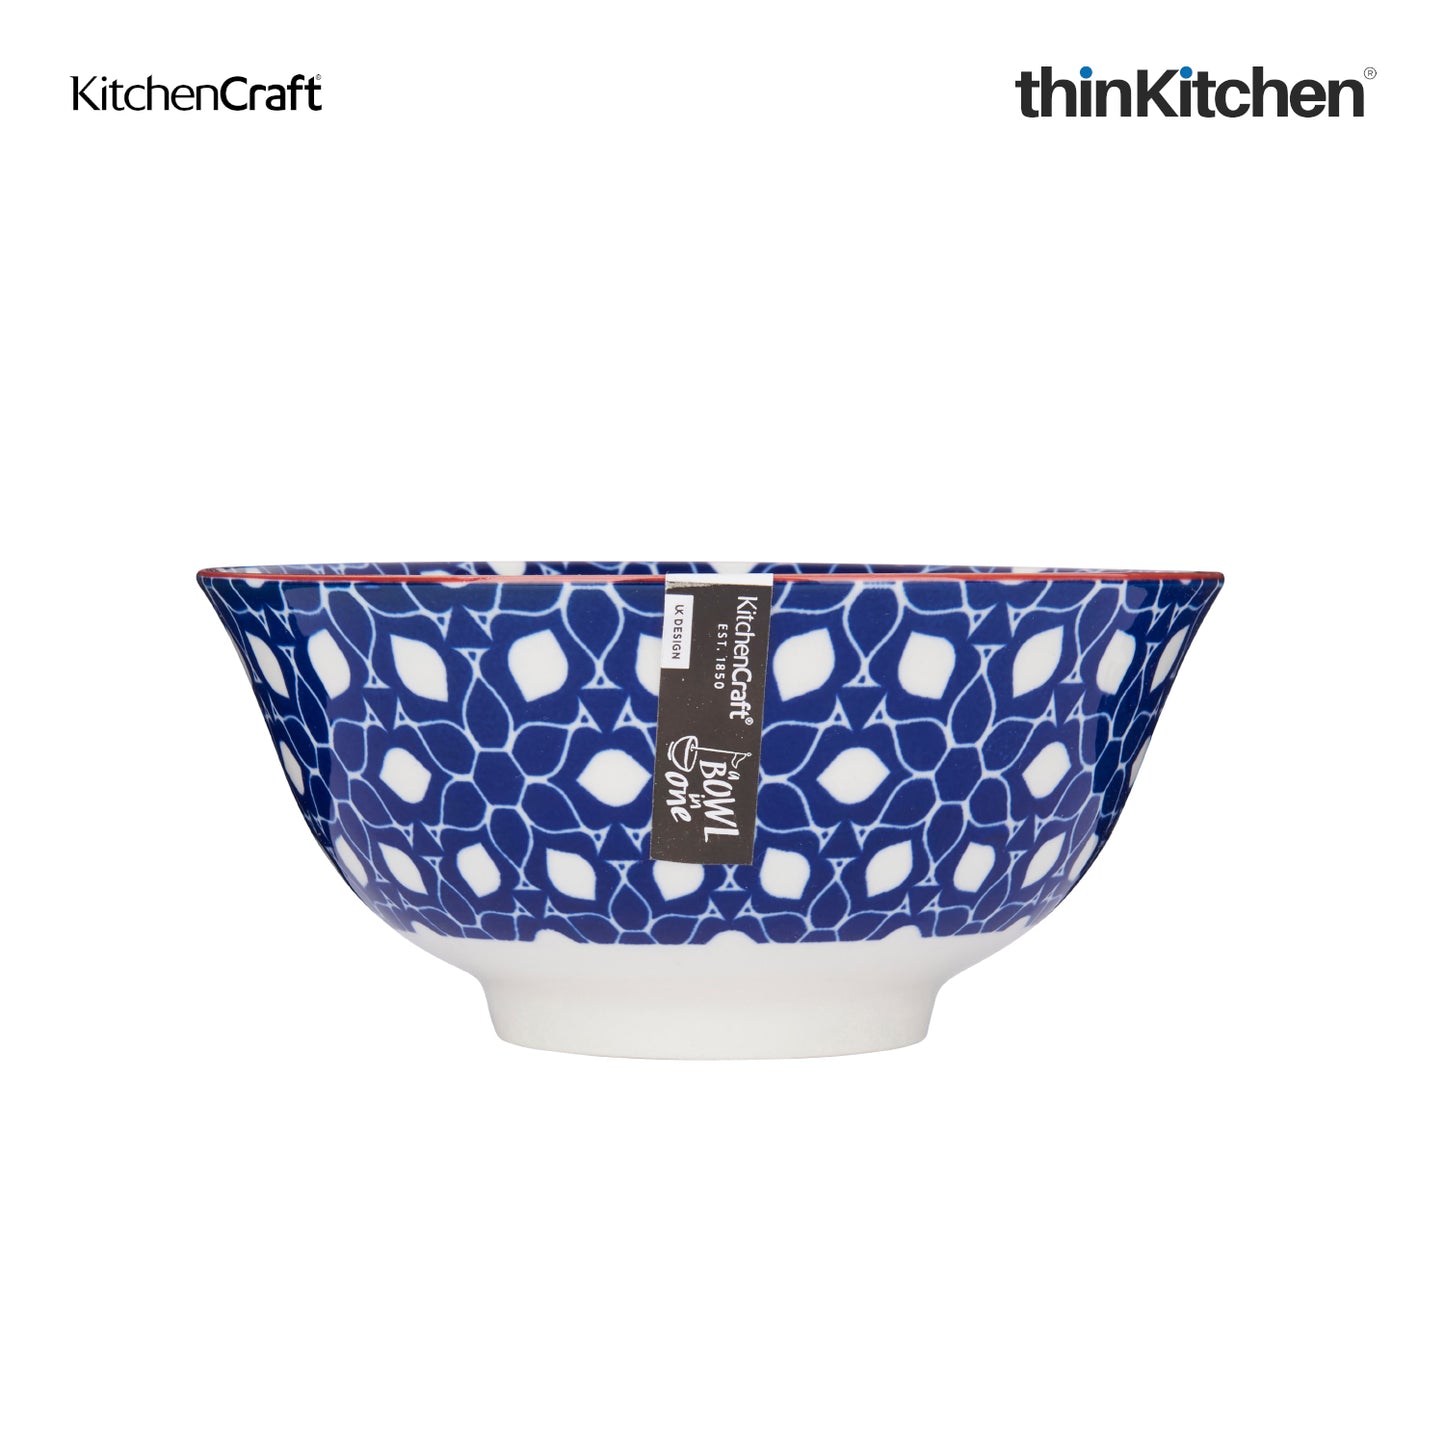 Kitchencraft Blue Floral Geometric Print Ceramic Bowl